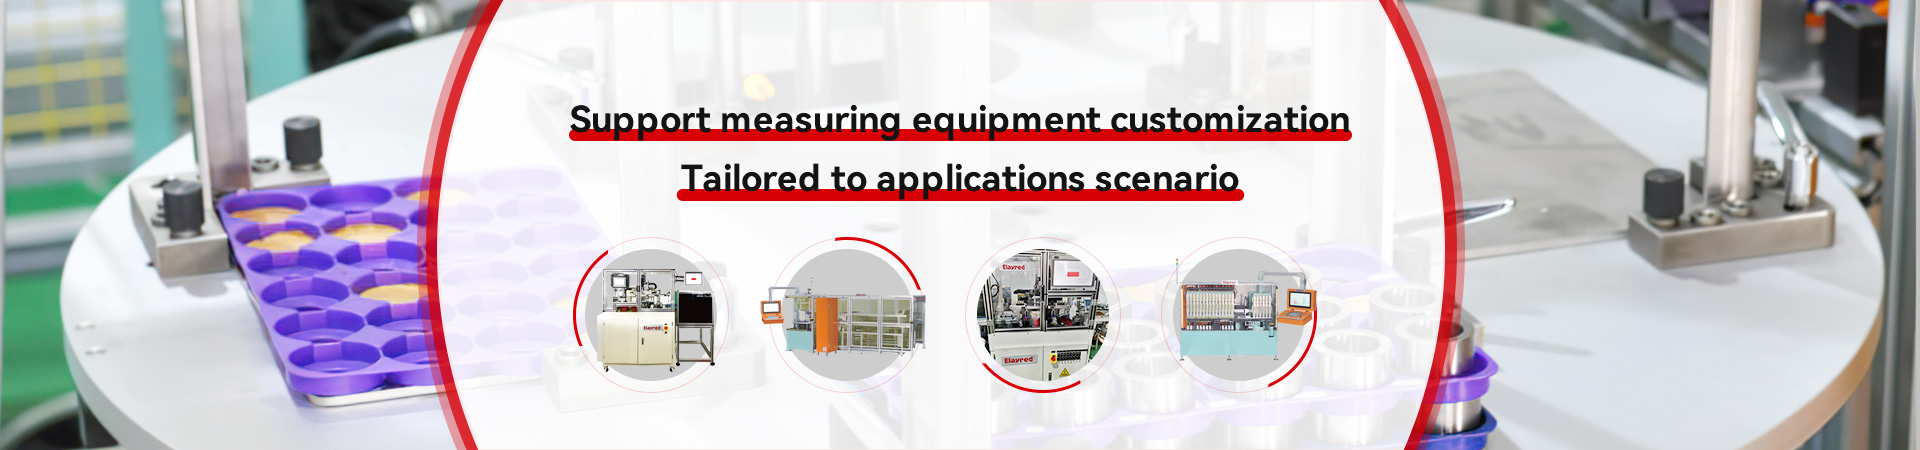 Support measuring equipment customization Tailored to applications scenario